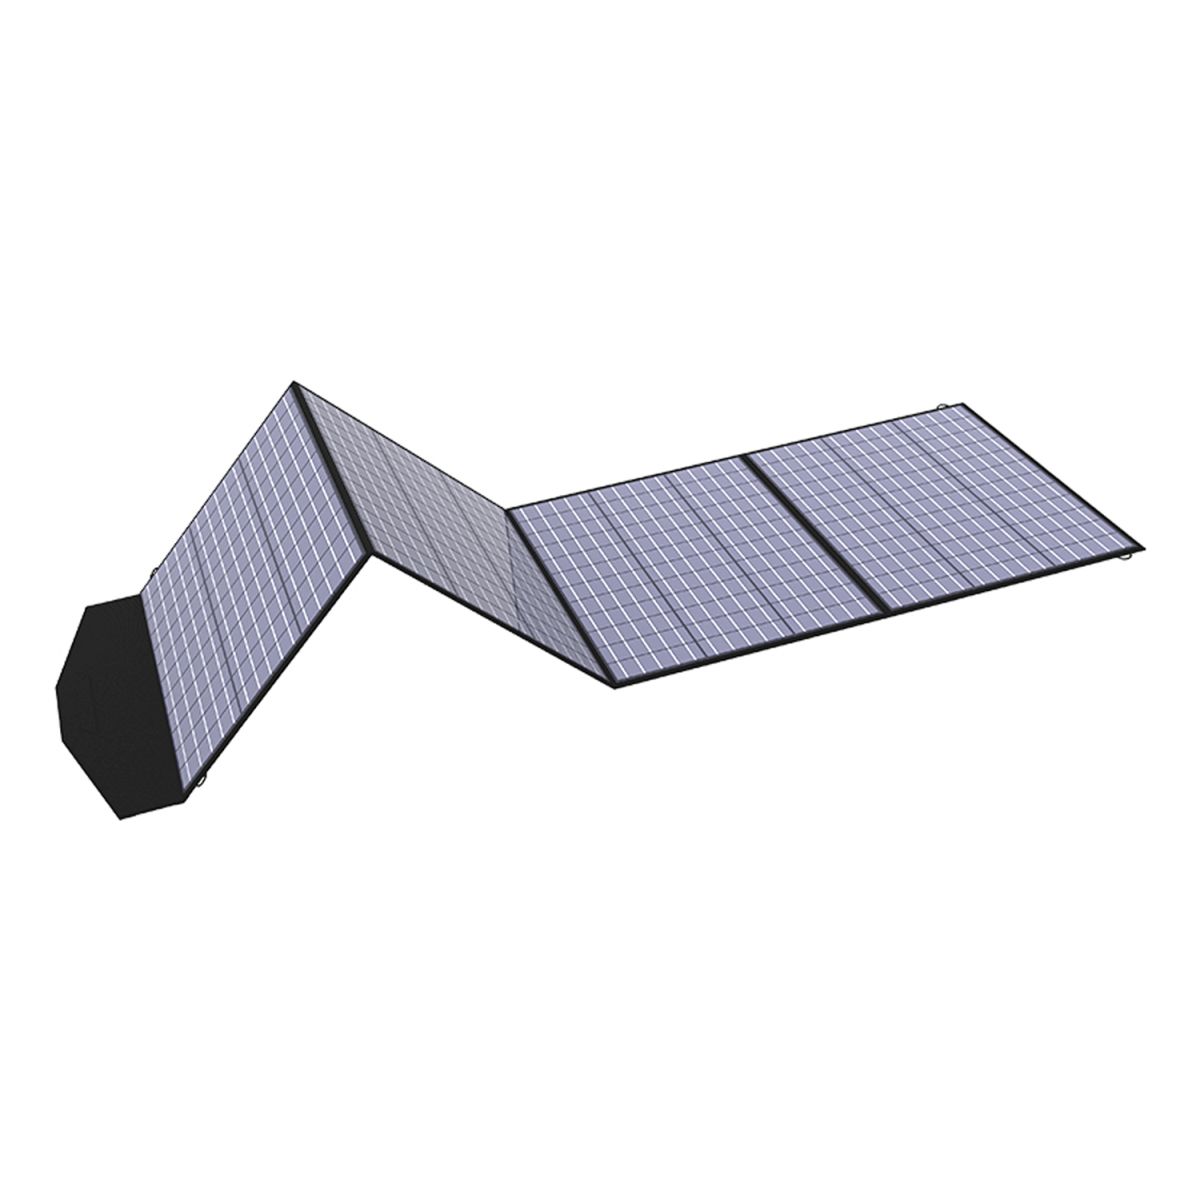 Patona Platinum 200W faltbares 4-fach Solarmodul Solarpanel mit DC Output